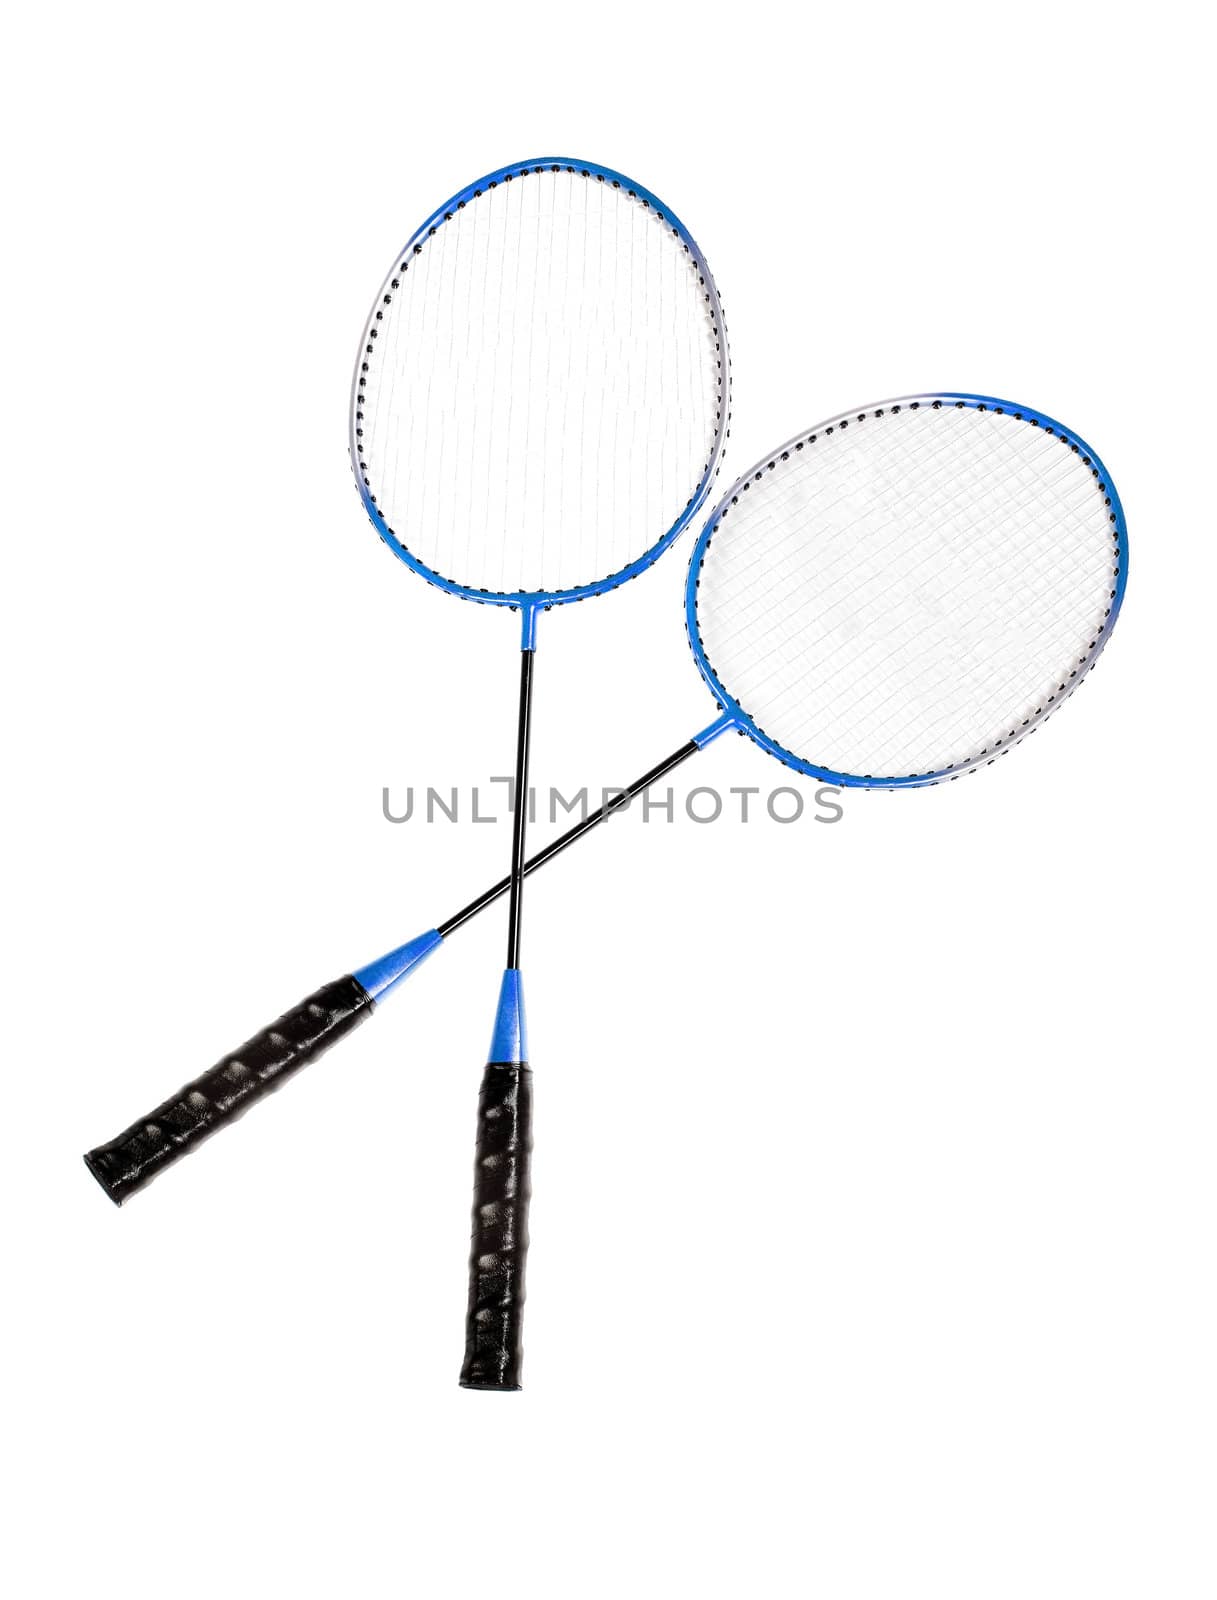 Badminton rackets by ozaiachin